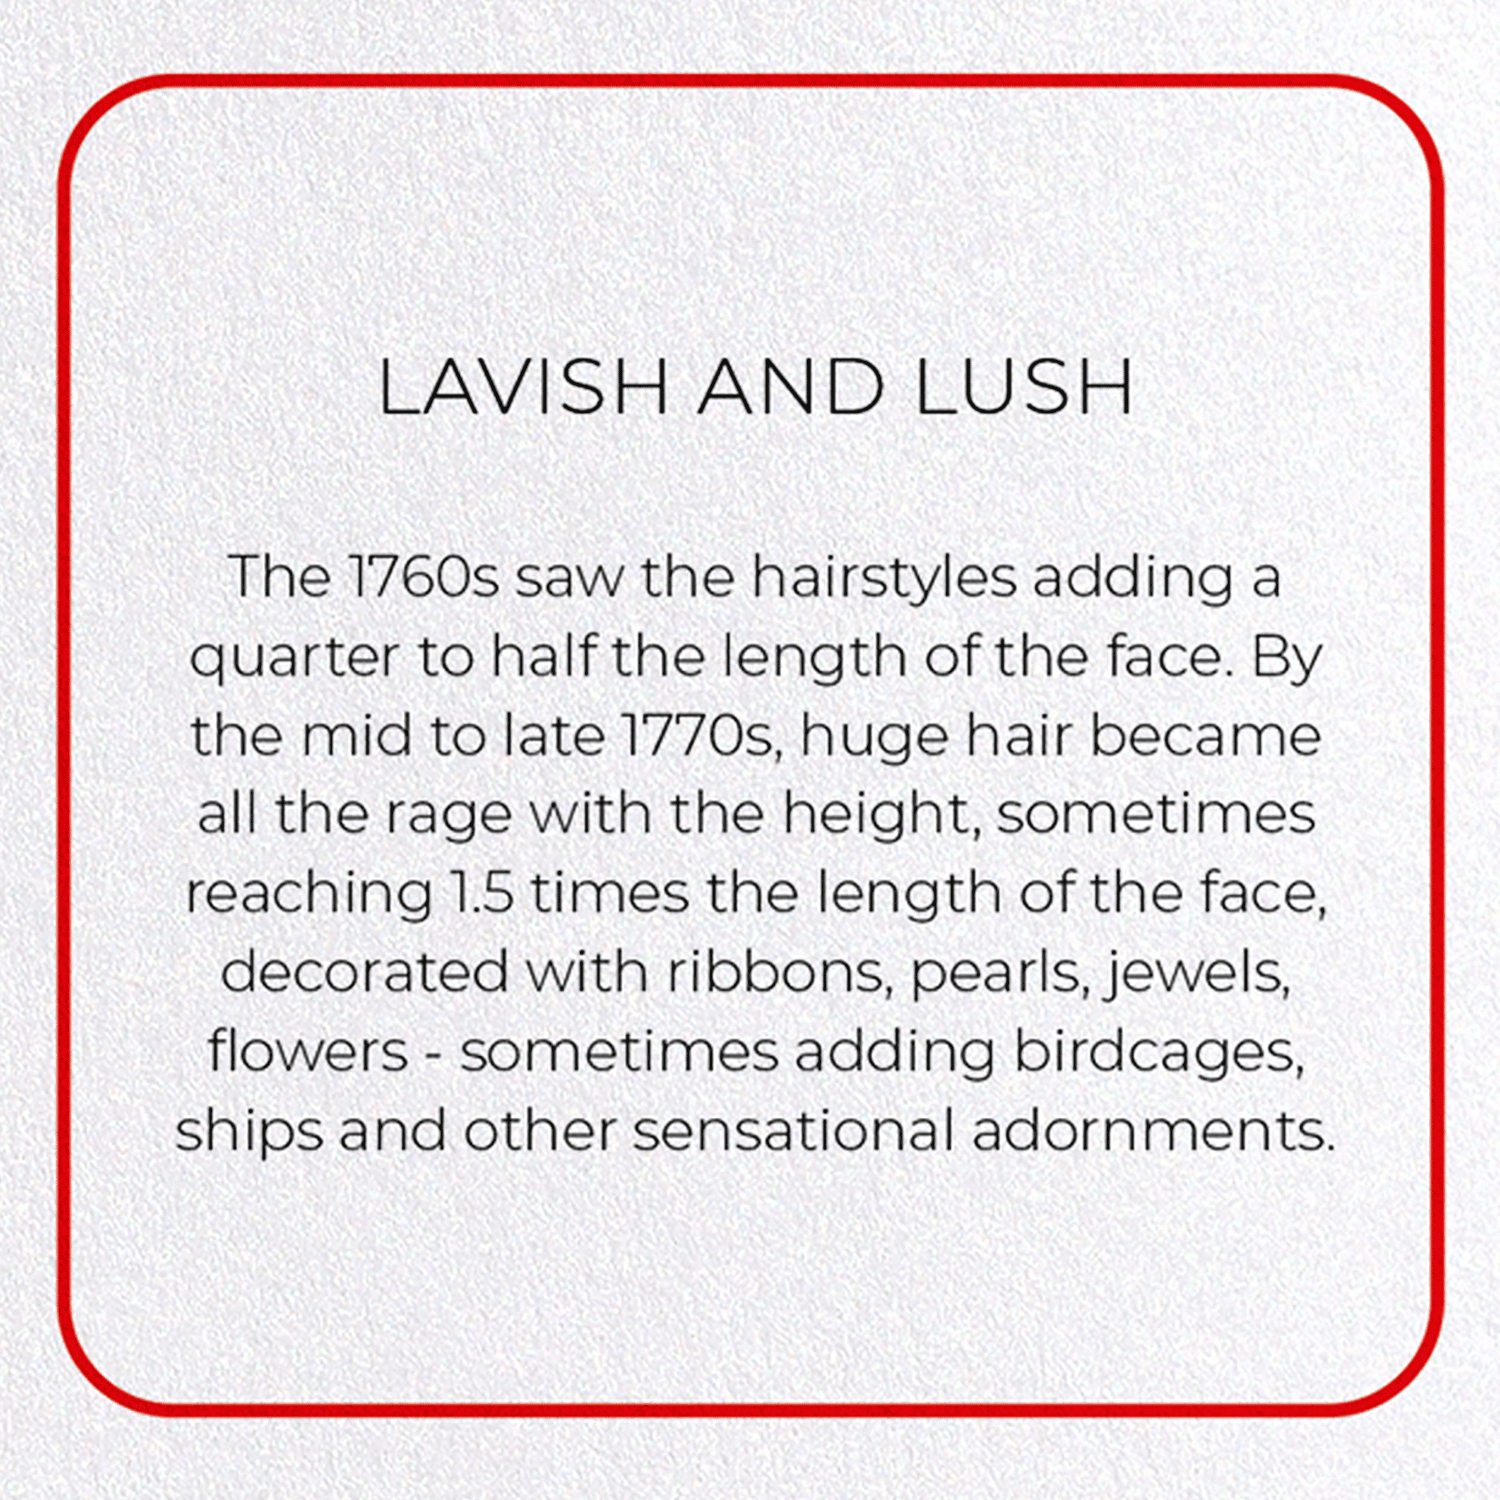 LAVISH AND LUSH